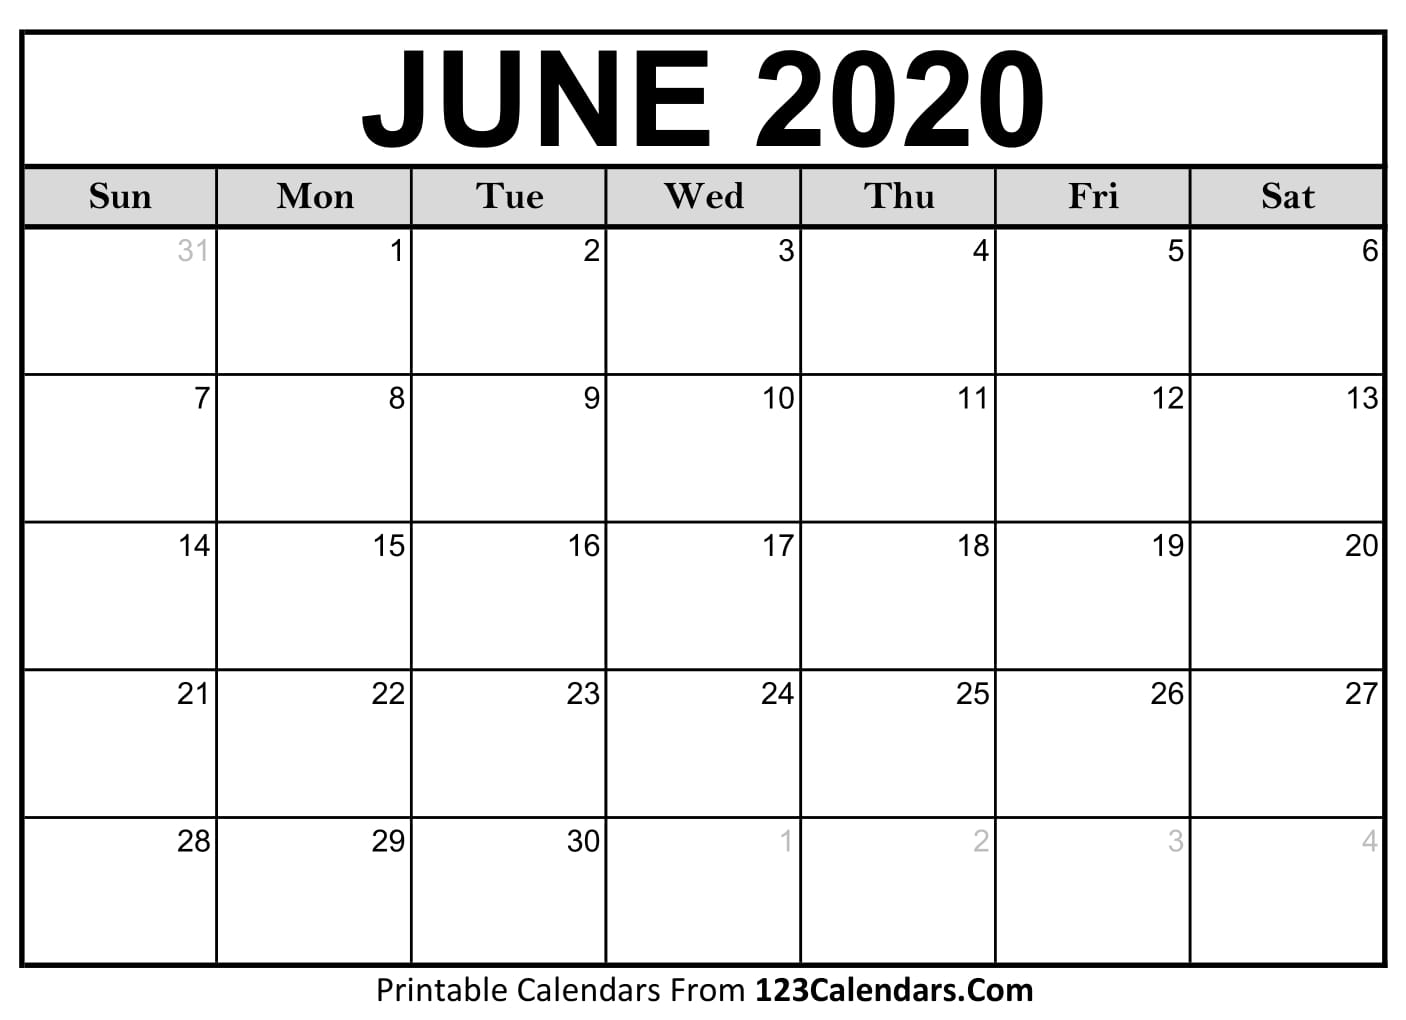 June 2020 Printable Calendar 123Calendars